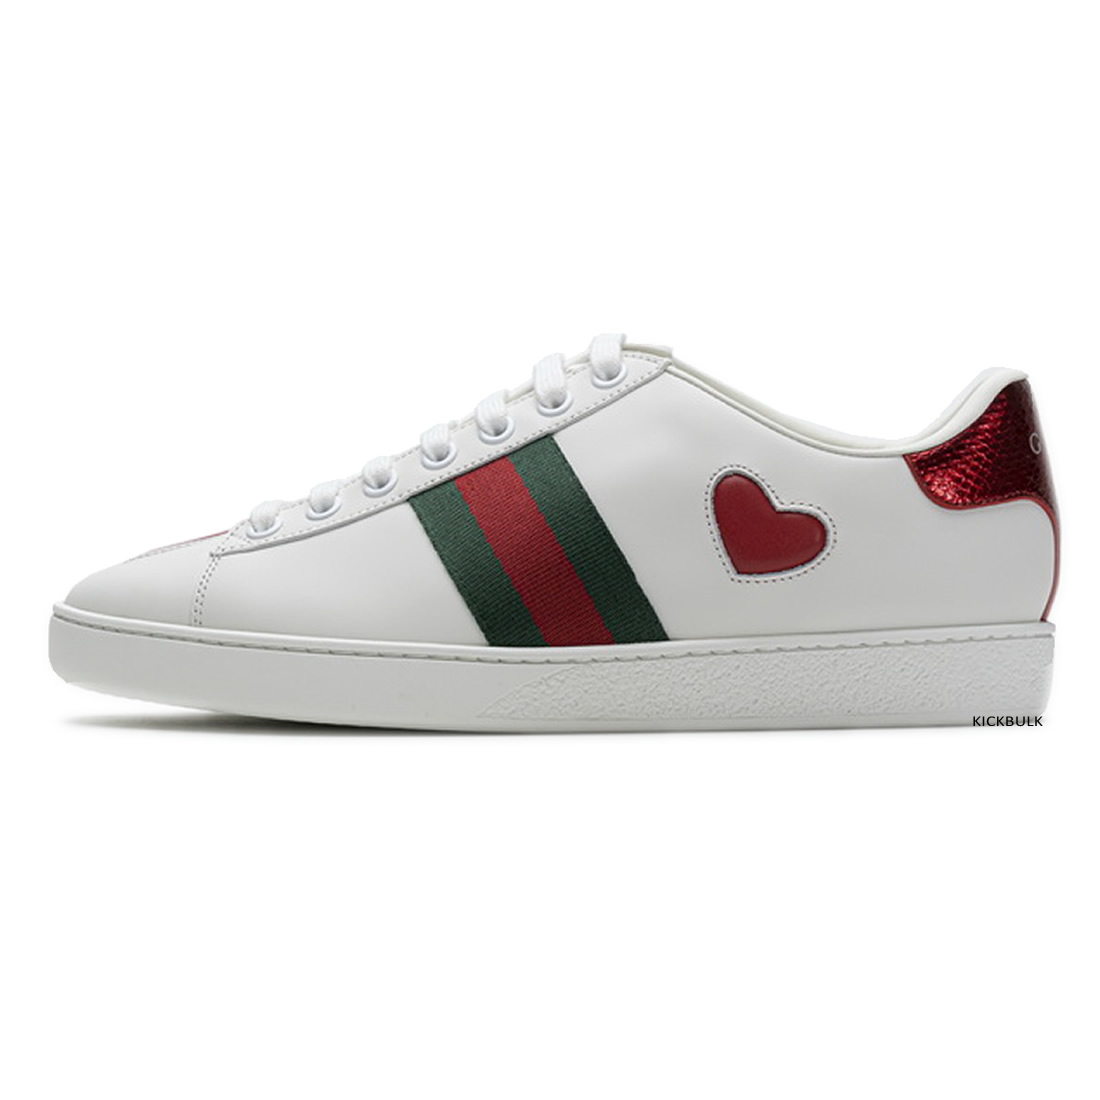 Gucci Love Sneakers 429446a39gq9085 1 - kickbulk.co